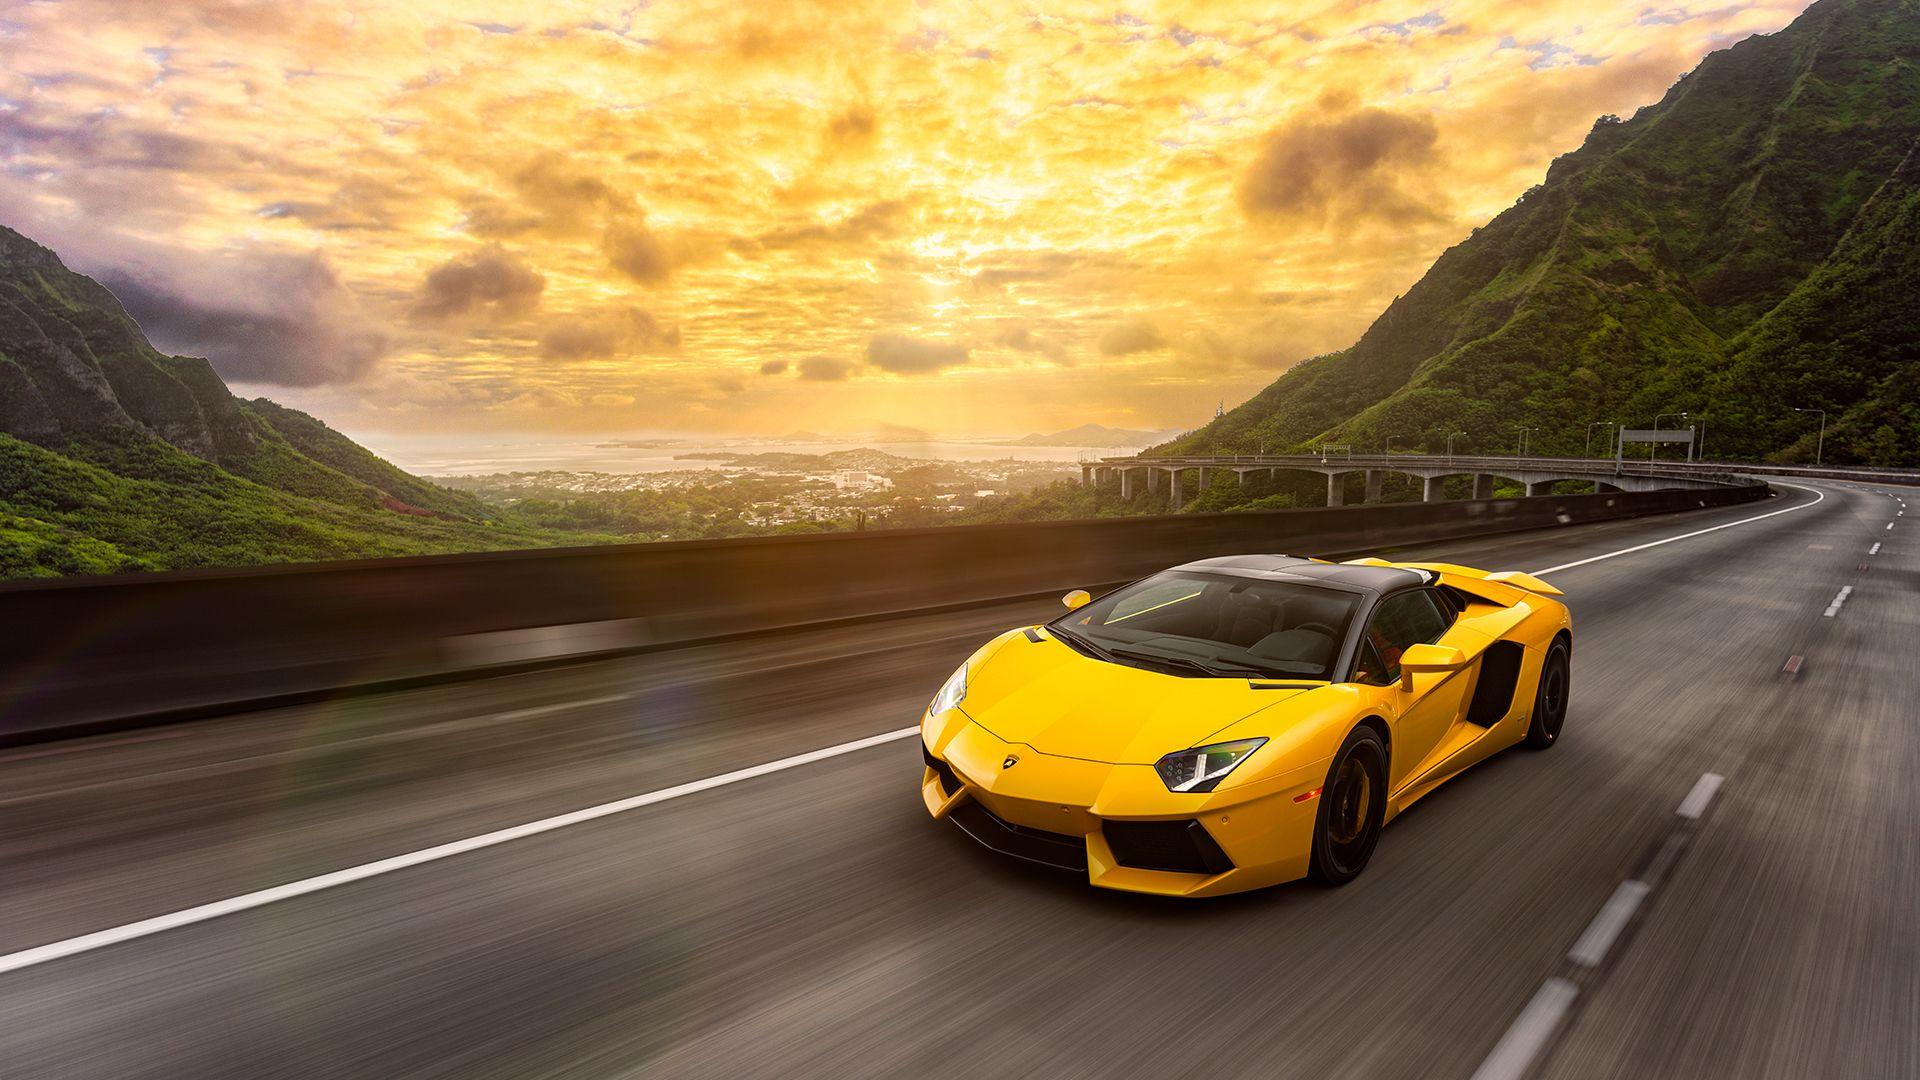 Wallpaper, yellow, Lamborghini Aventador, sports car, driving